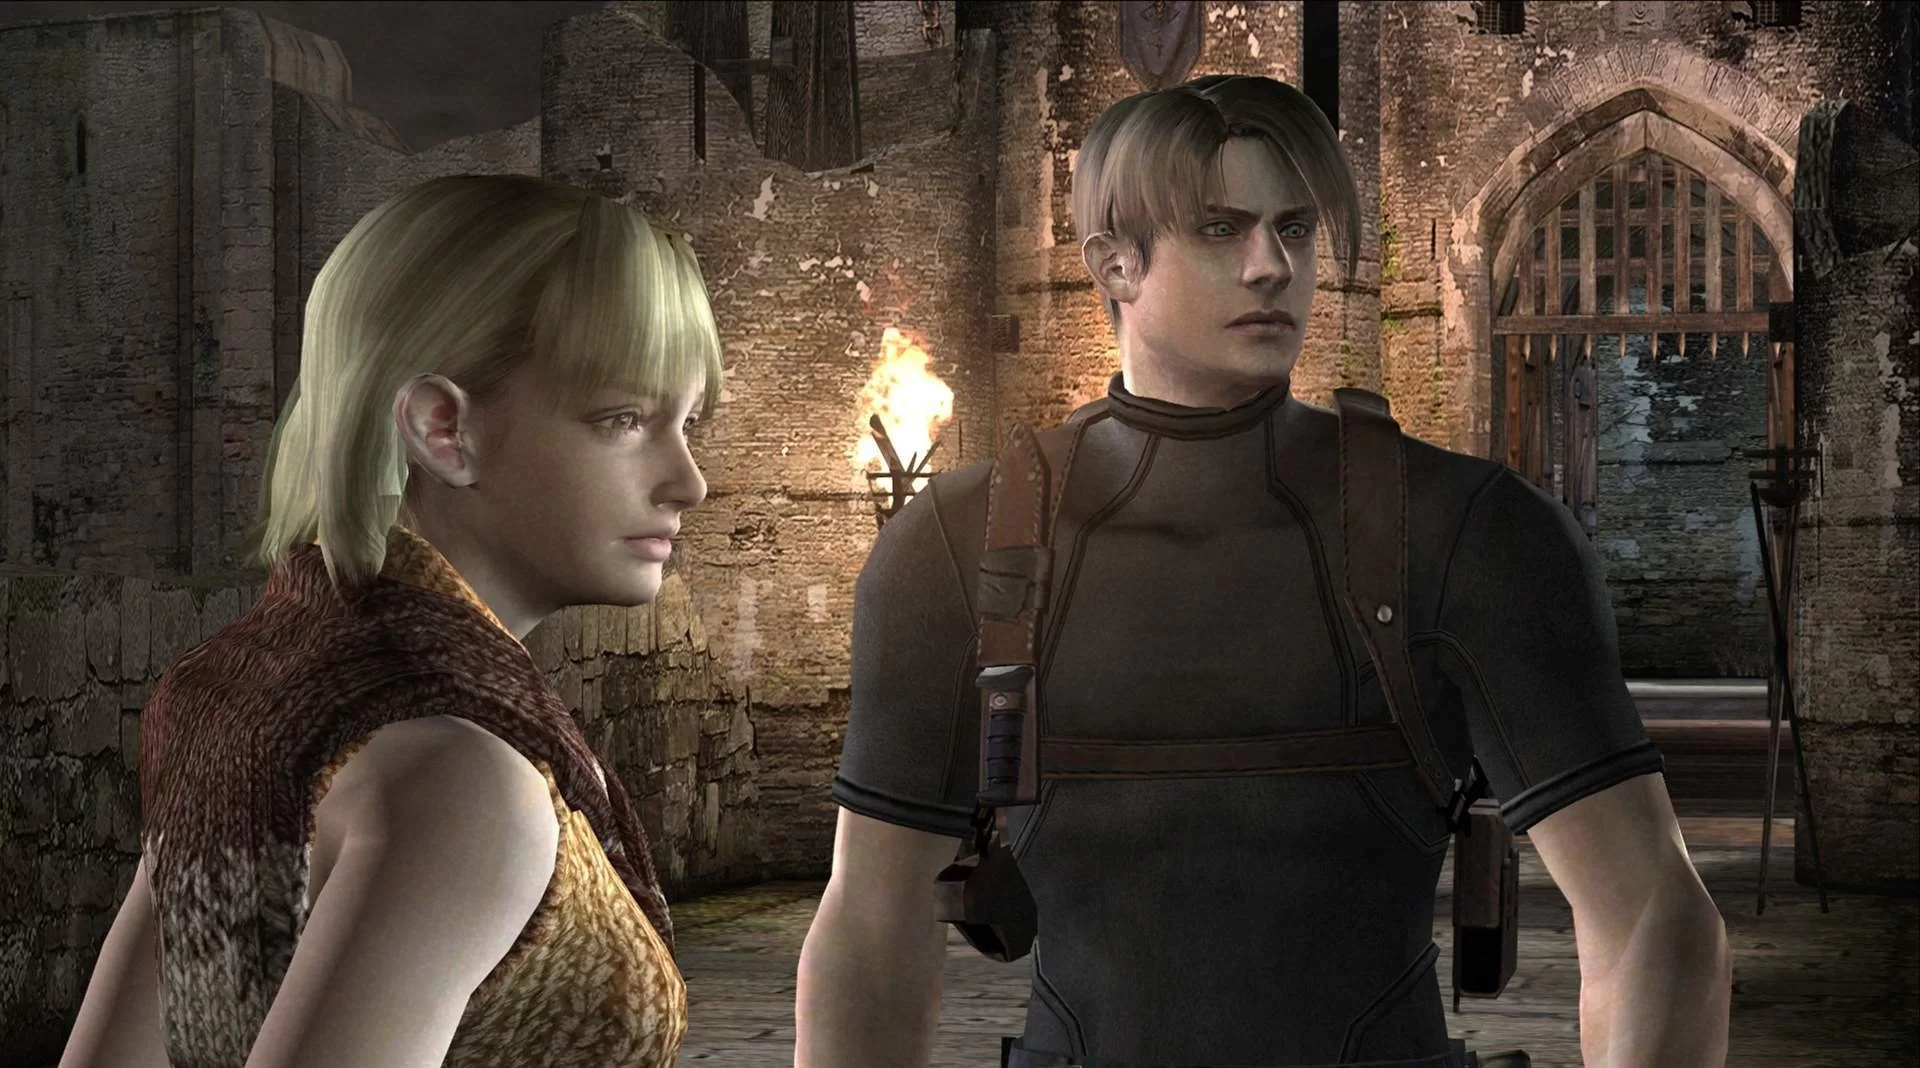 image4 | Resident Evil | ภาคต่อของภาพยนตร์ Resident Evil:Welcome to Raccoon City มีเเผนจะใช้เกมภาค 4 เป็นฉากหลังเรื่องราวต่อไป